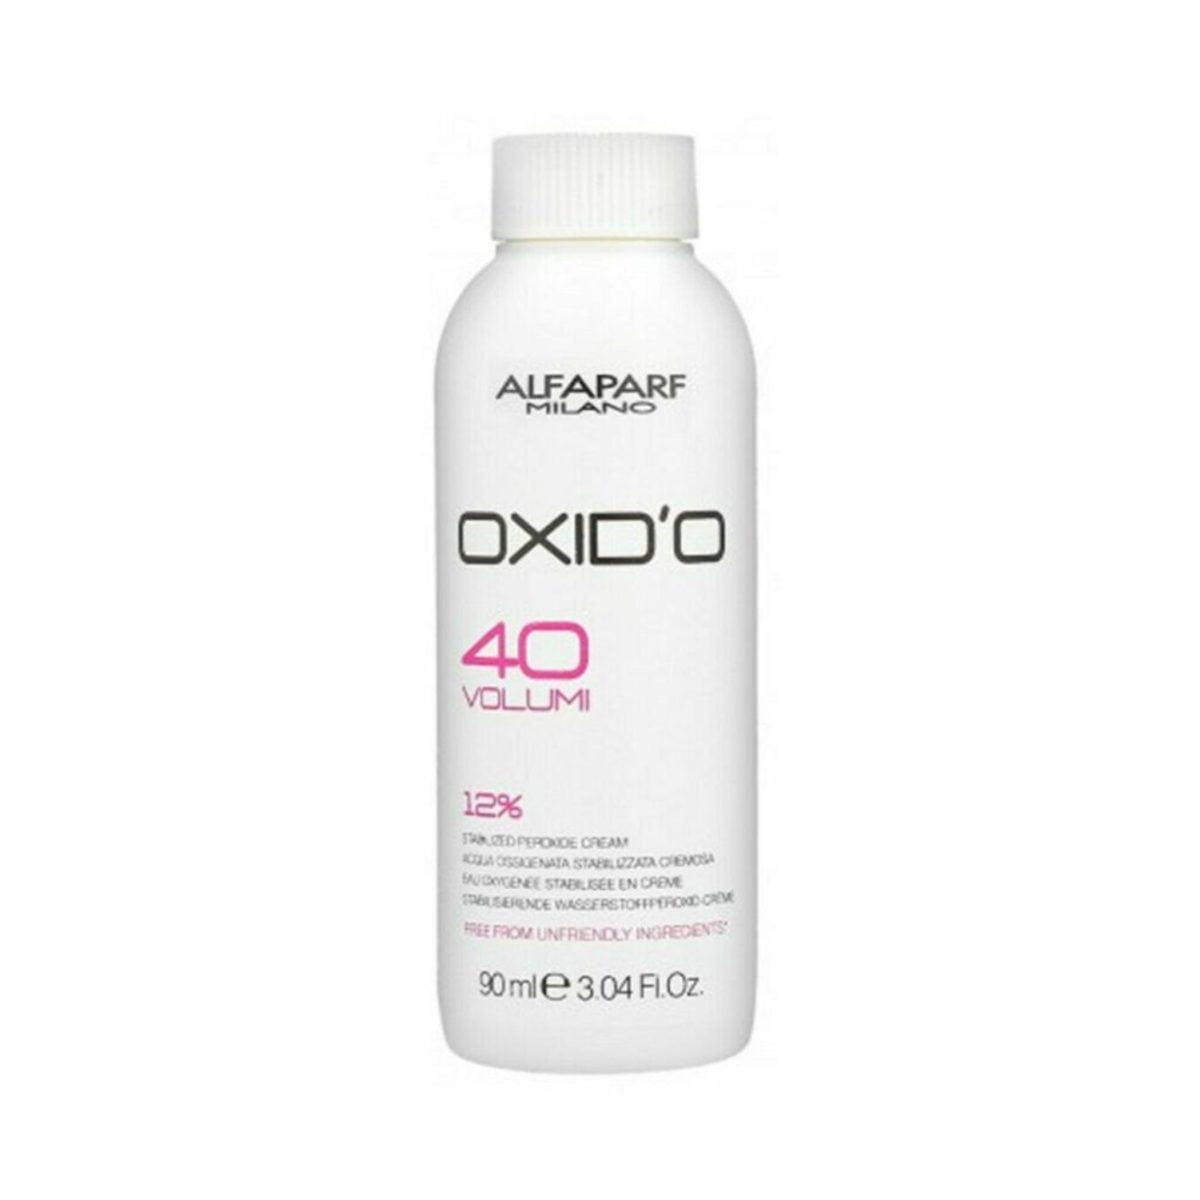 Oxidant crema 12%, Alfaparf, Oxid'O 40 Volumi, 90ml